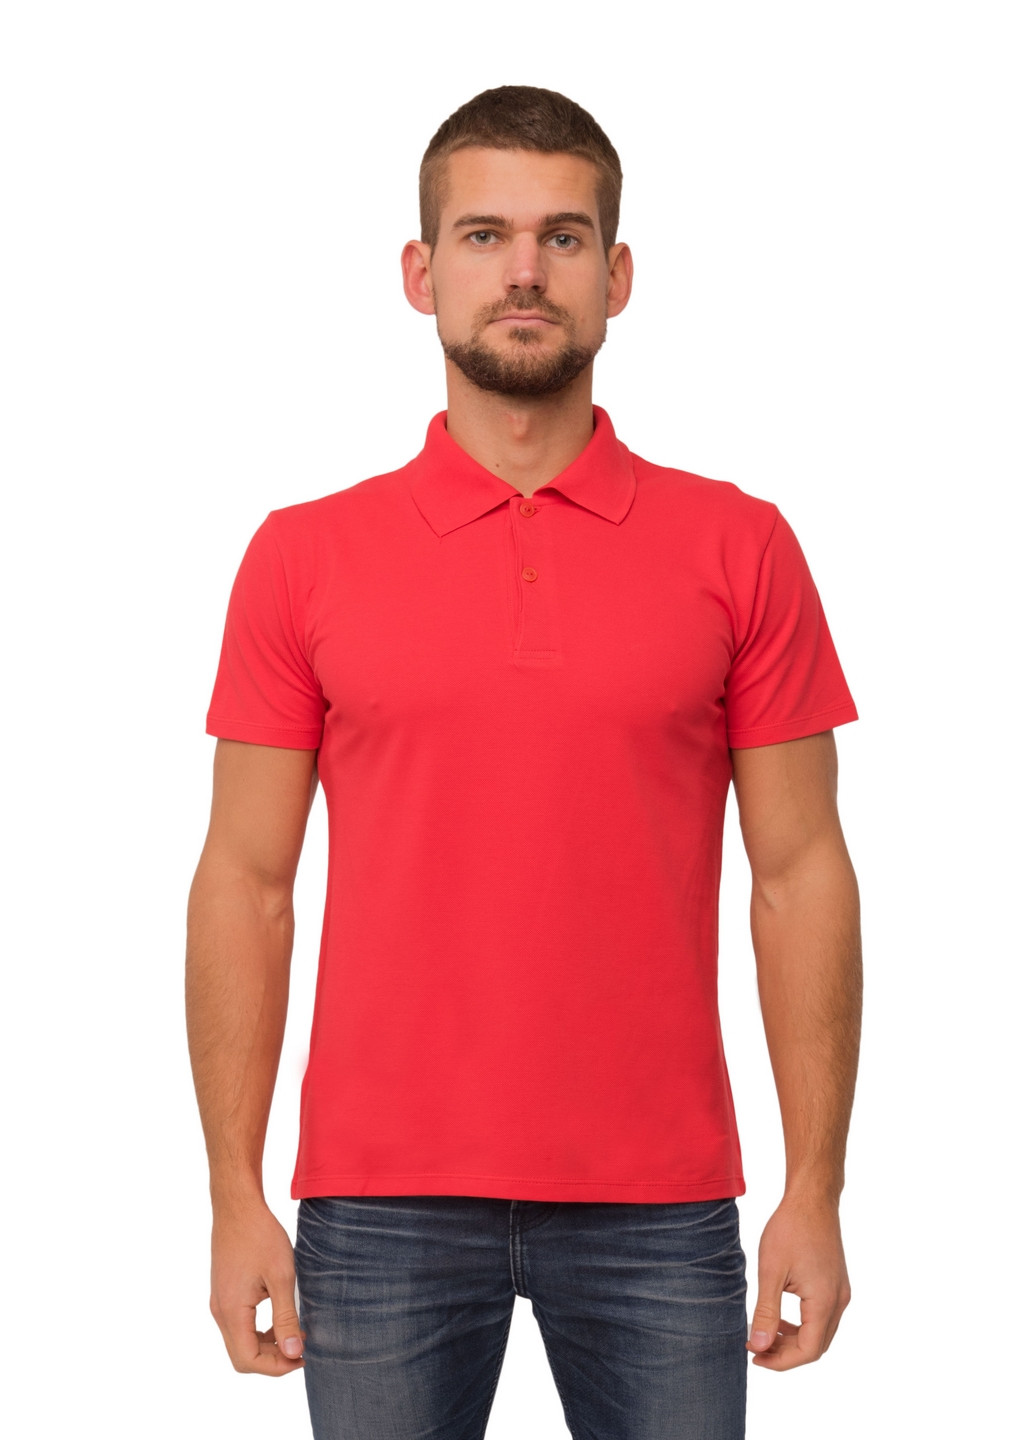 Красная футболка-футболка поло для мужчин Наталюкс